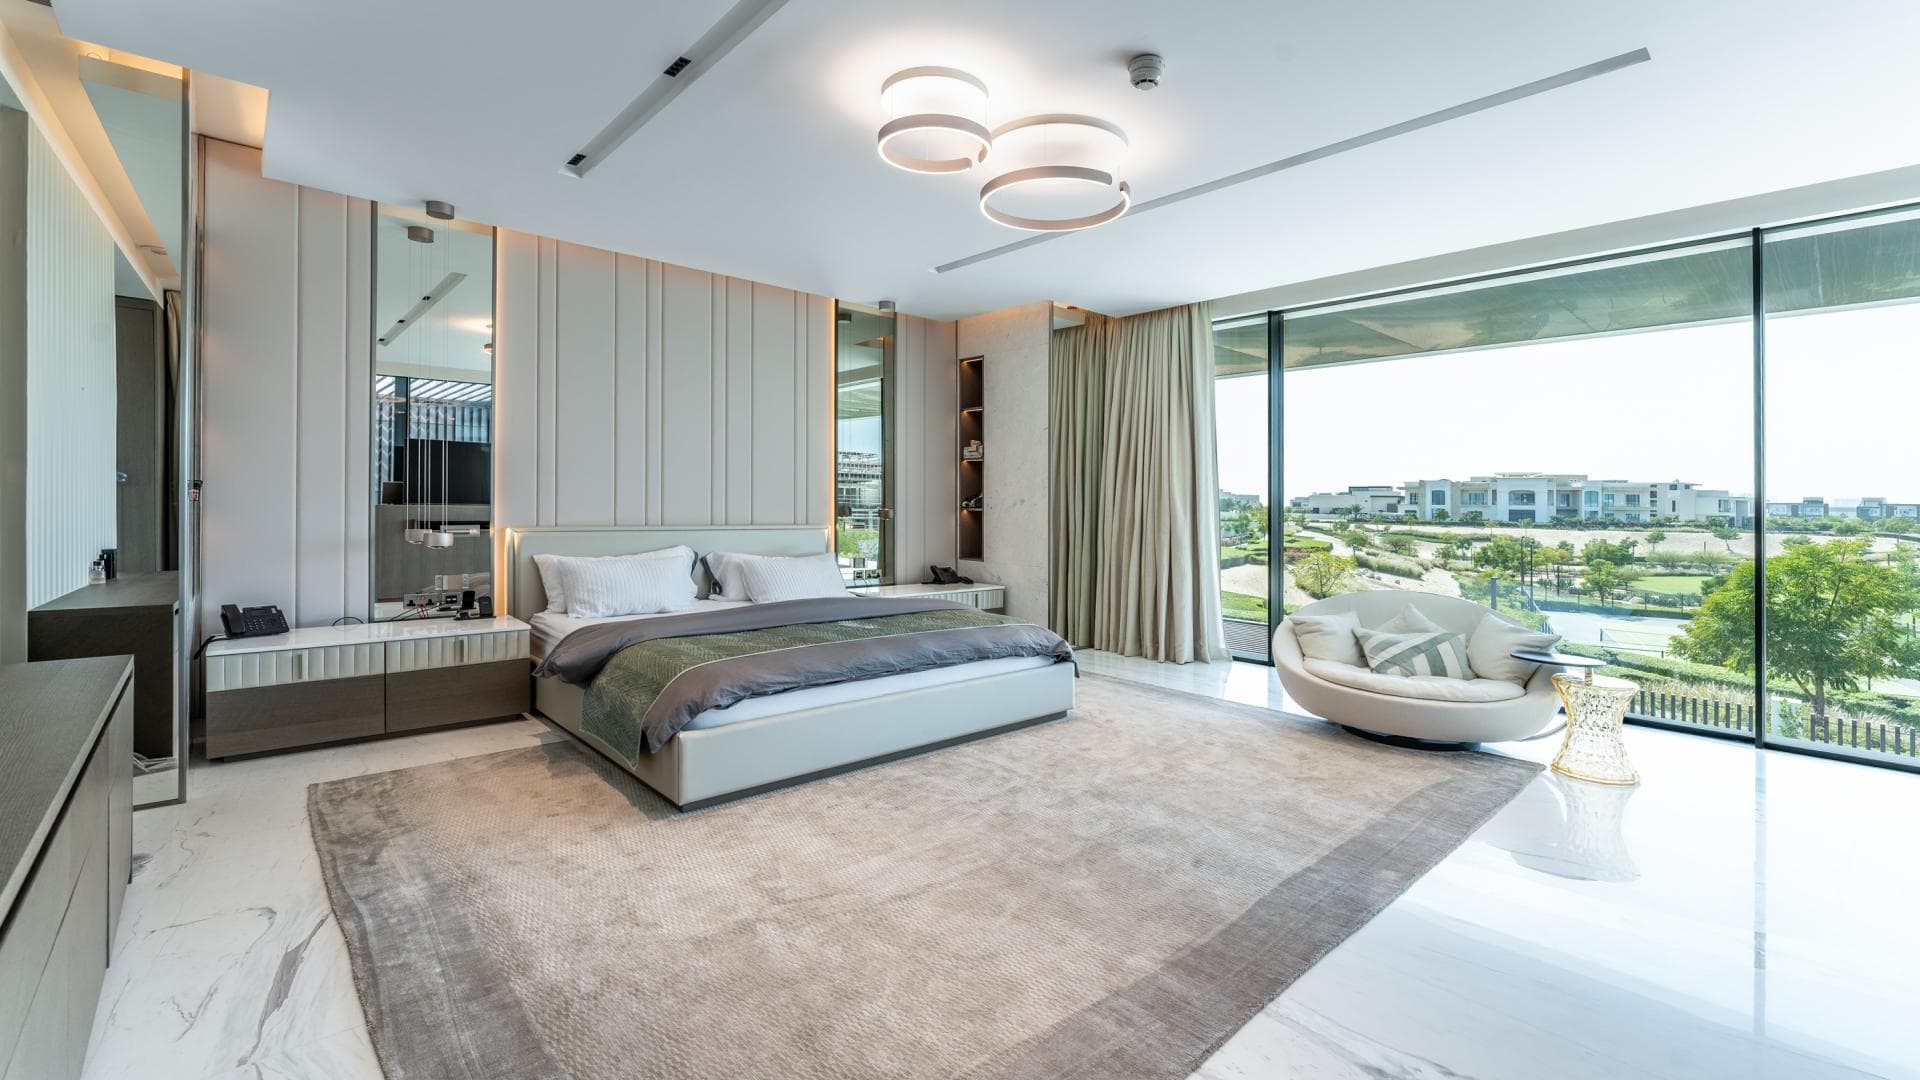 5 Bedroom Villa For Sale Dubai Hills Lp17448 30657813bbad9e00.jpg